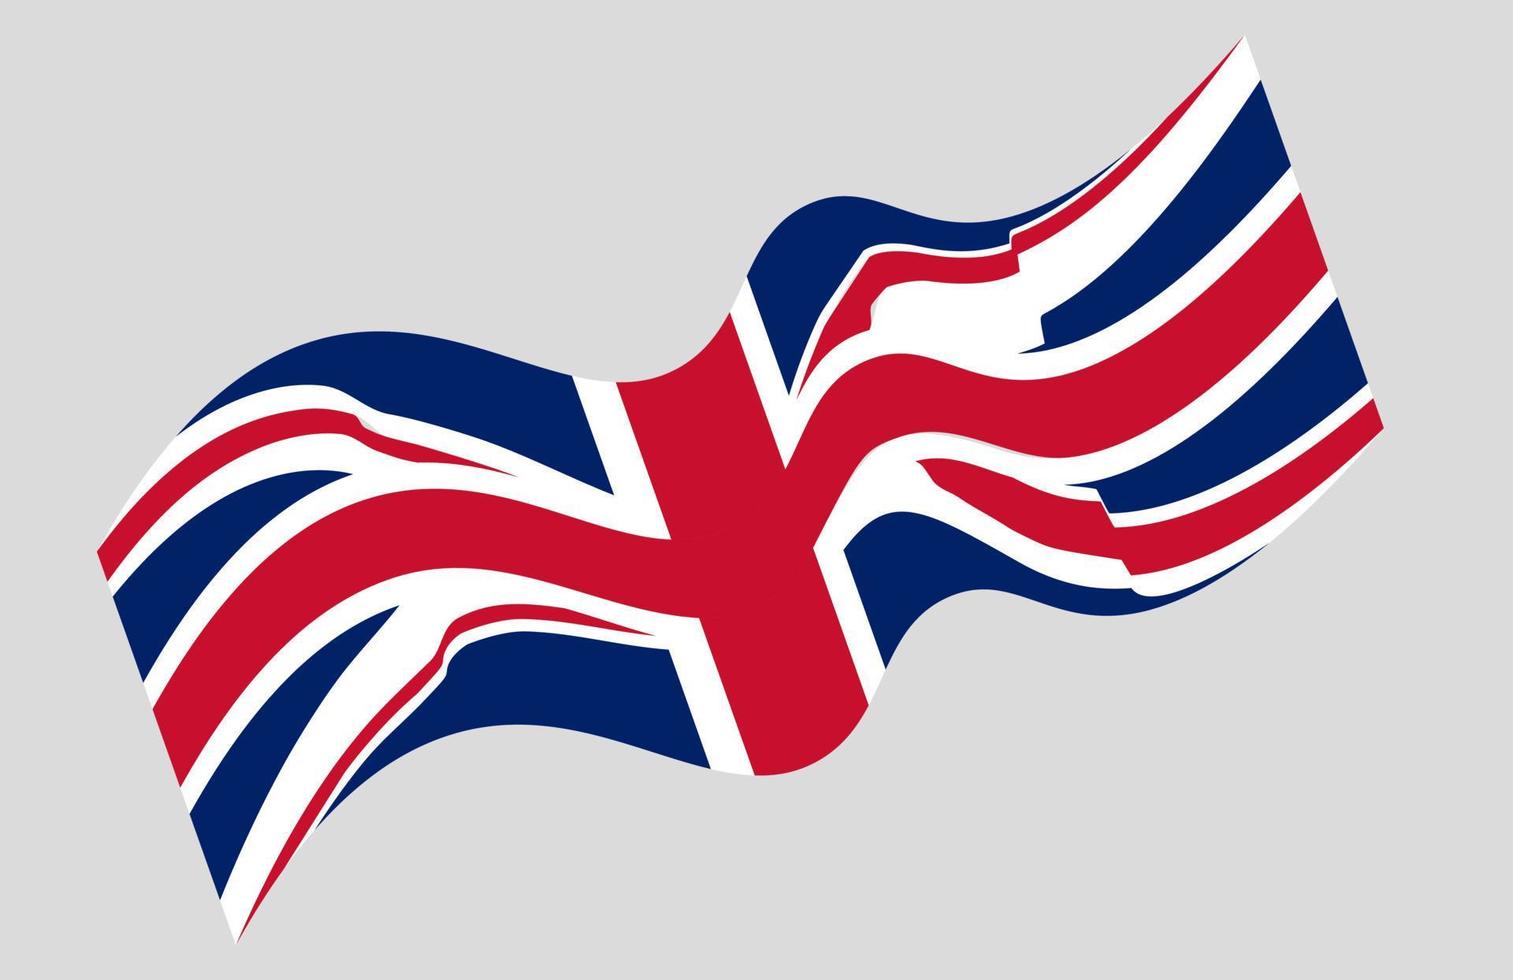 flag of Union Jack, uk england, united kingdom flag vector illustration.  Flag of Great Britain - 3D illustration. 3d illustration. waving colorful flag of great britain.